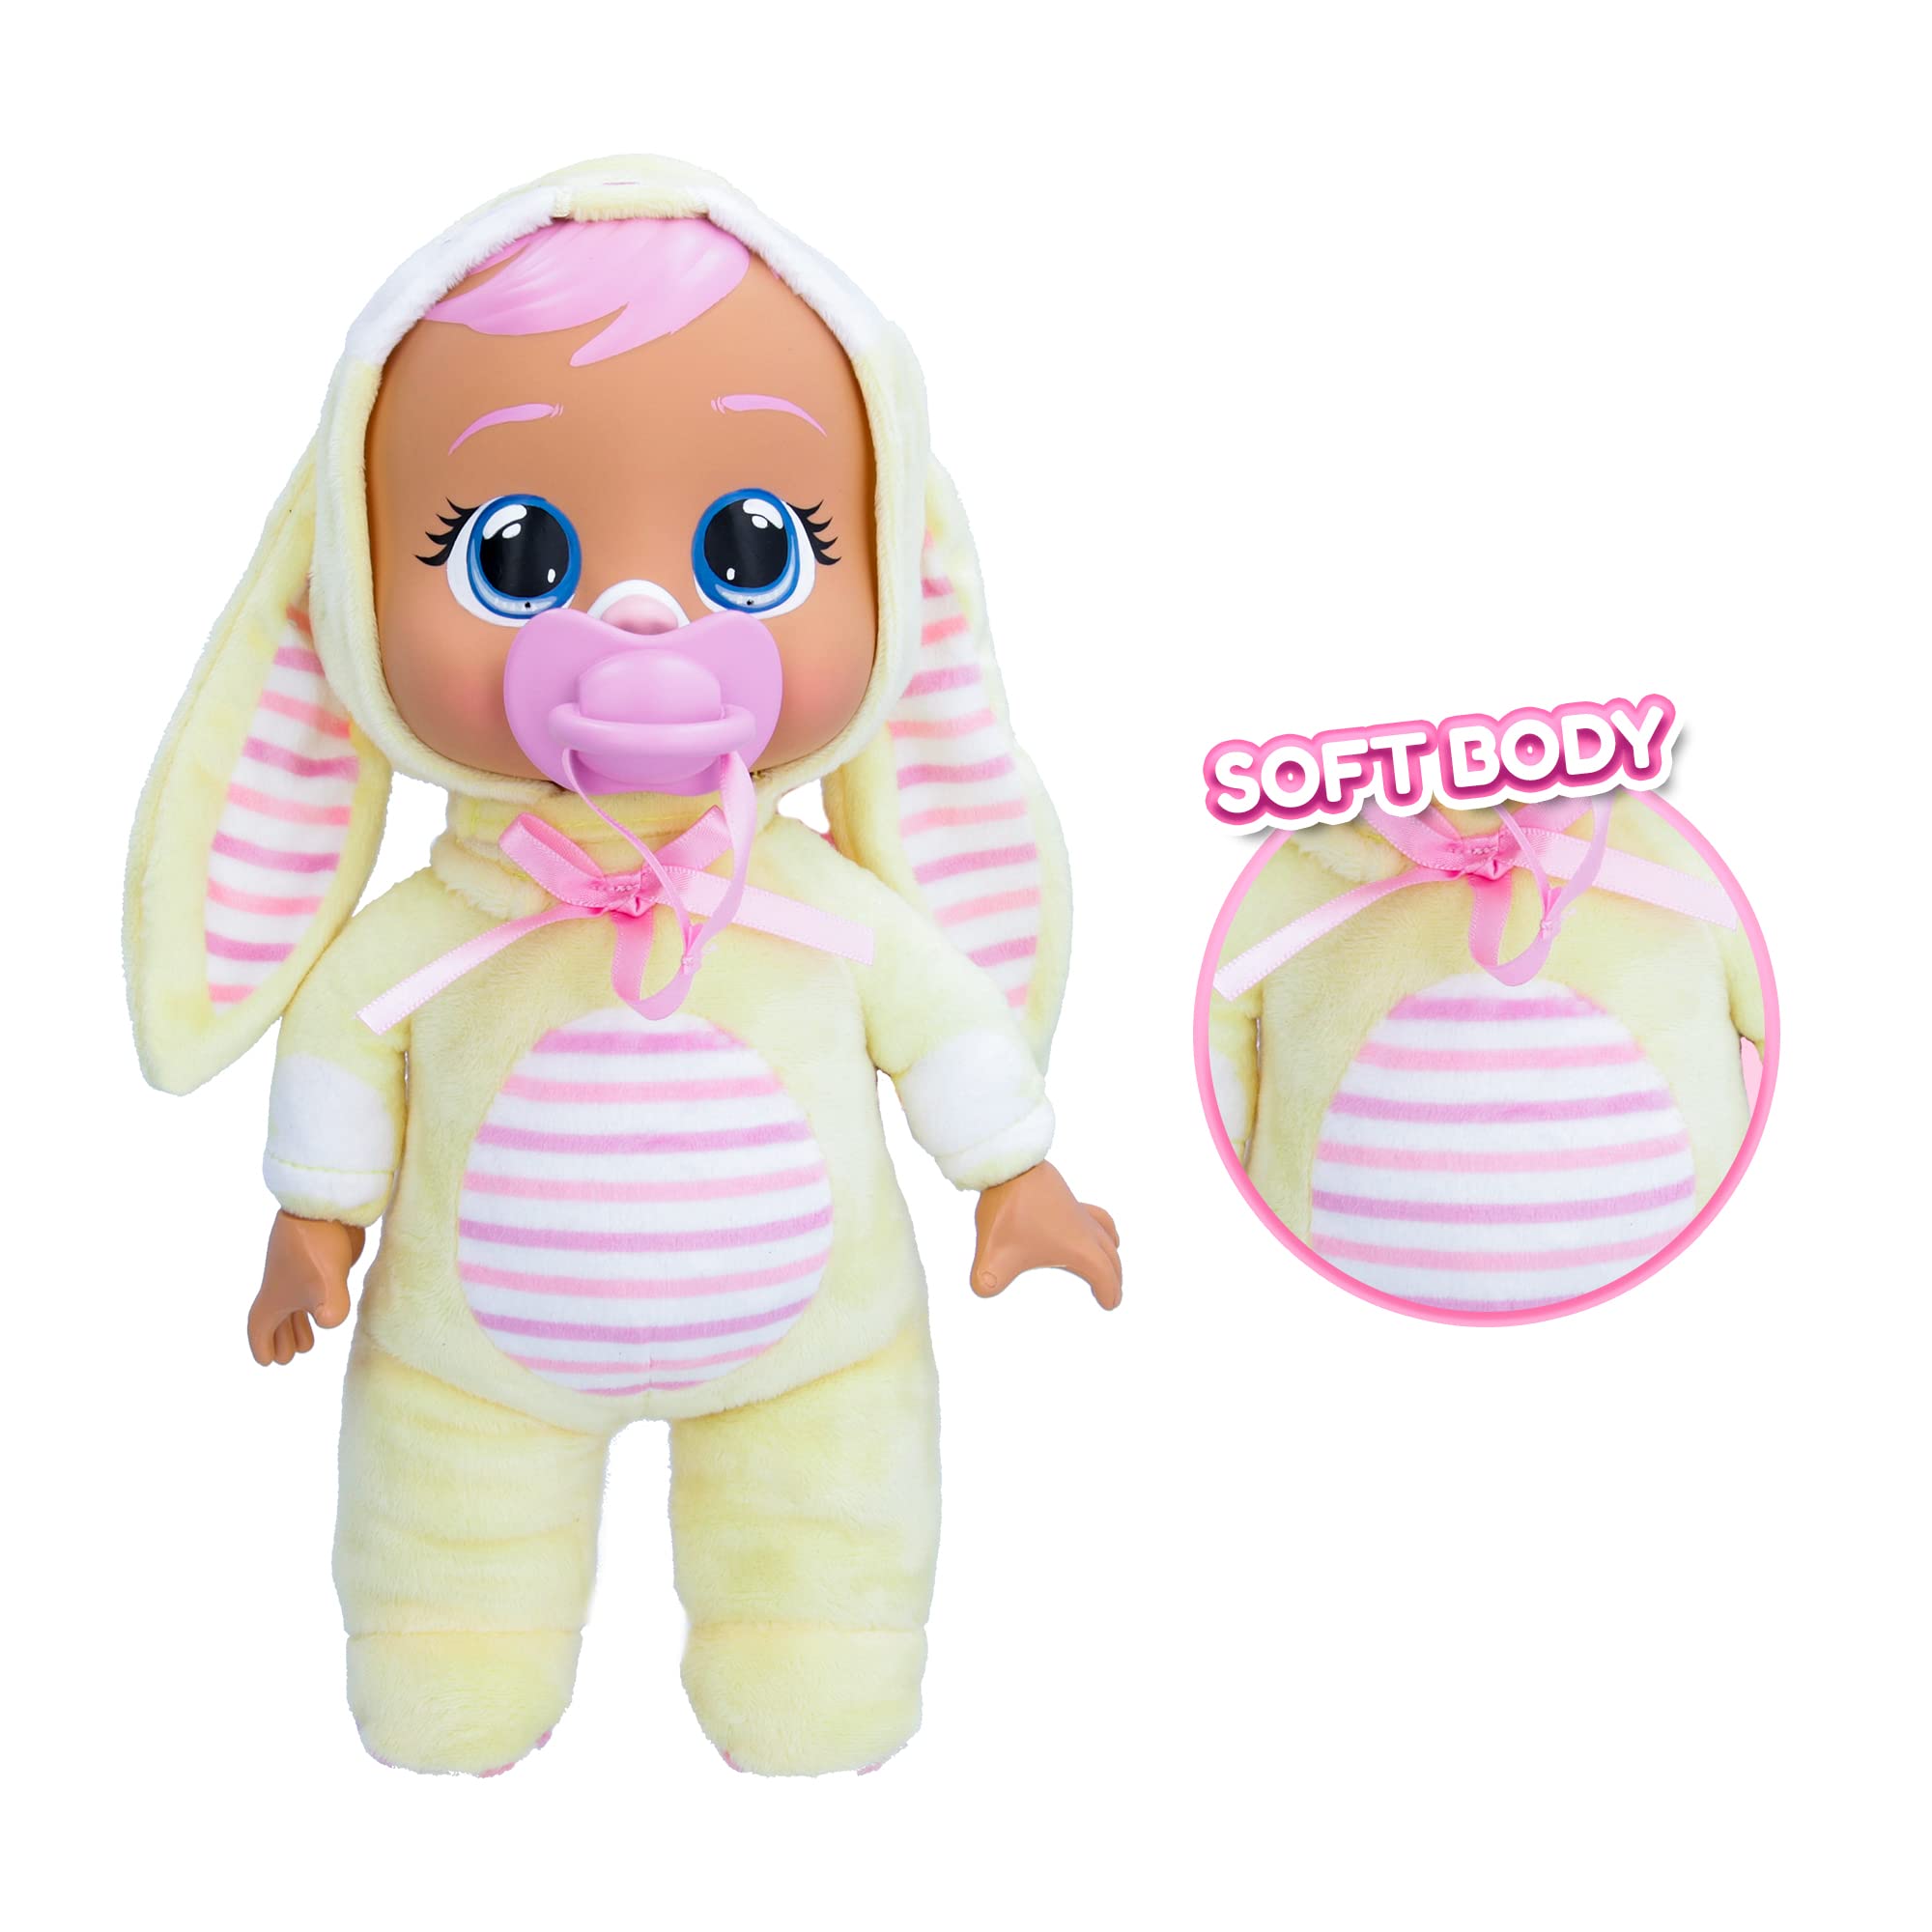 Cry Babies Tiny Cuddles Bunnies Sally - 9 inch Baby Doll, Cries Real Tears, Yellow Bunny Themed Pajamas